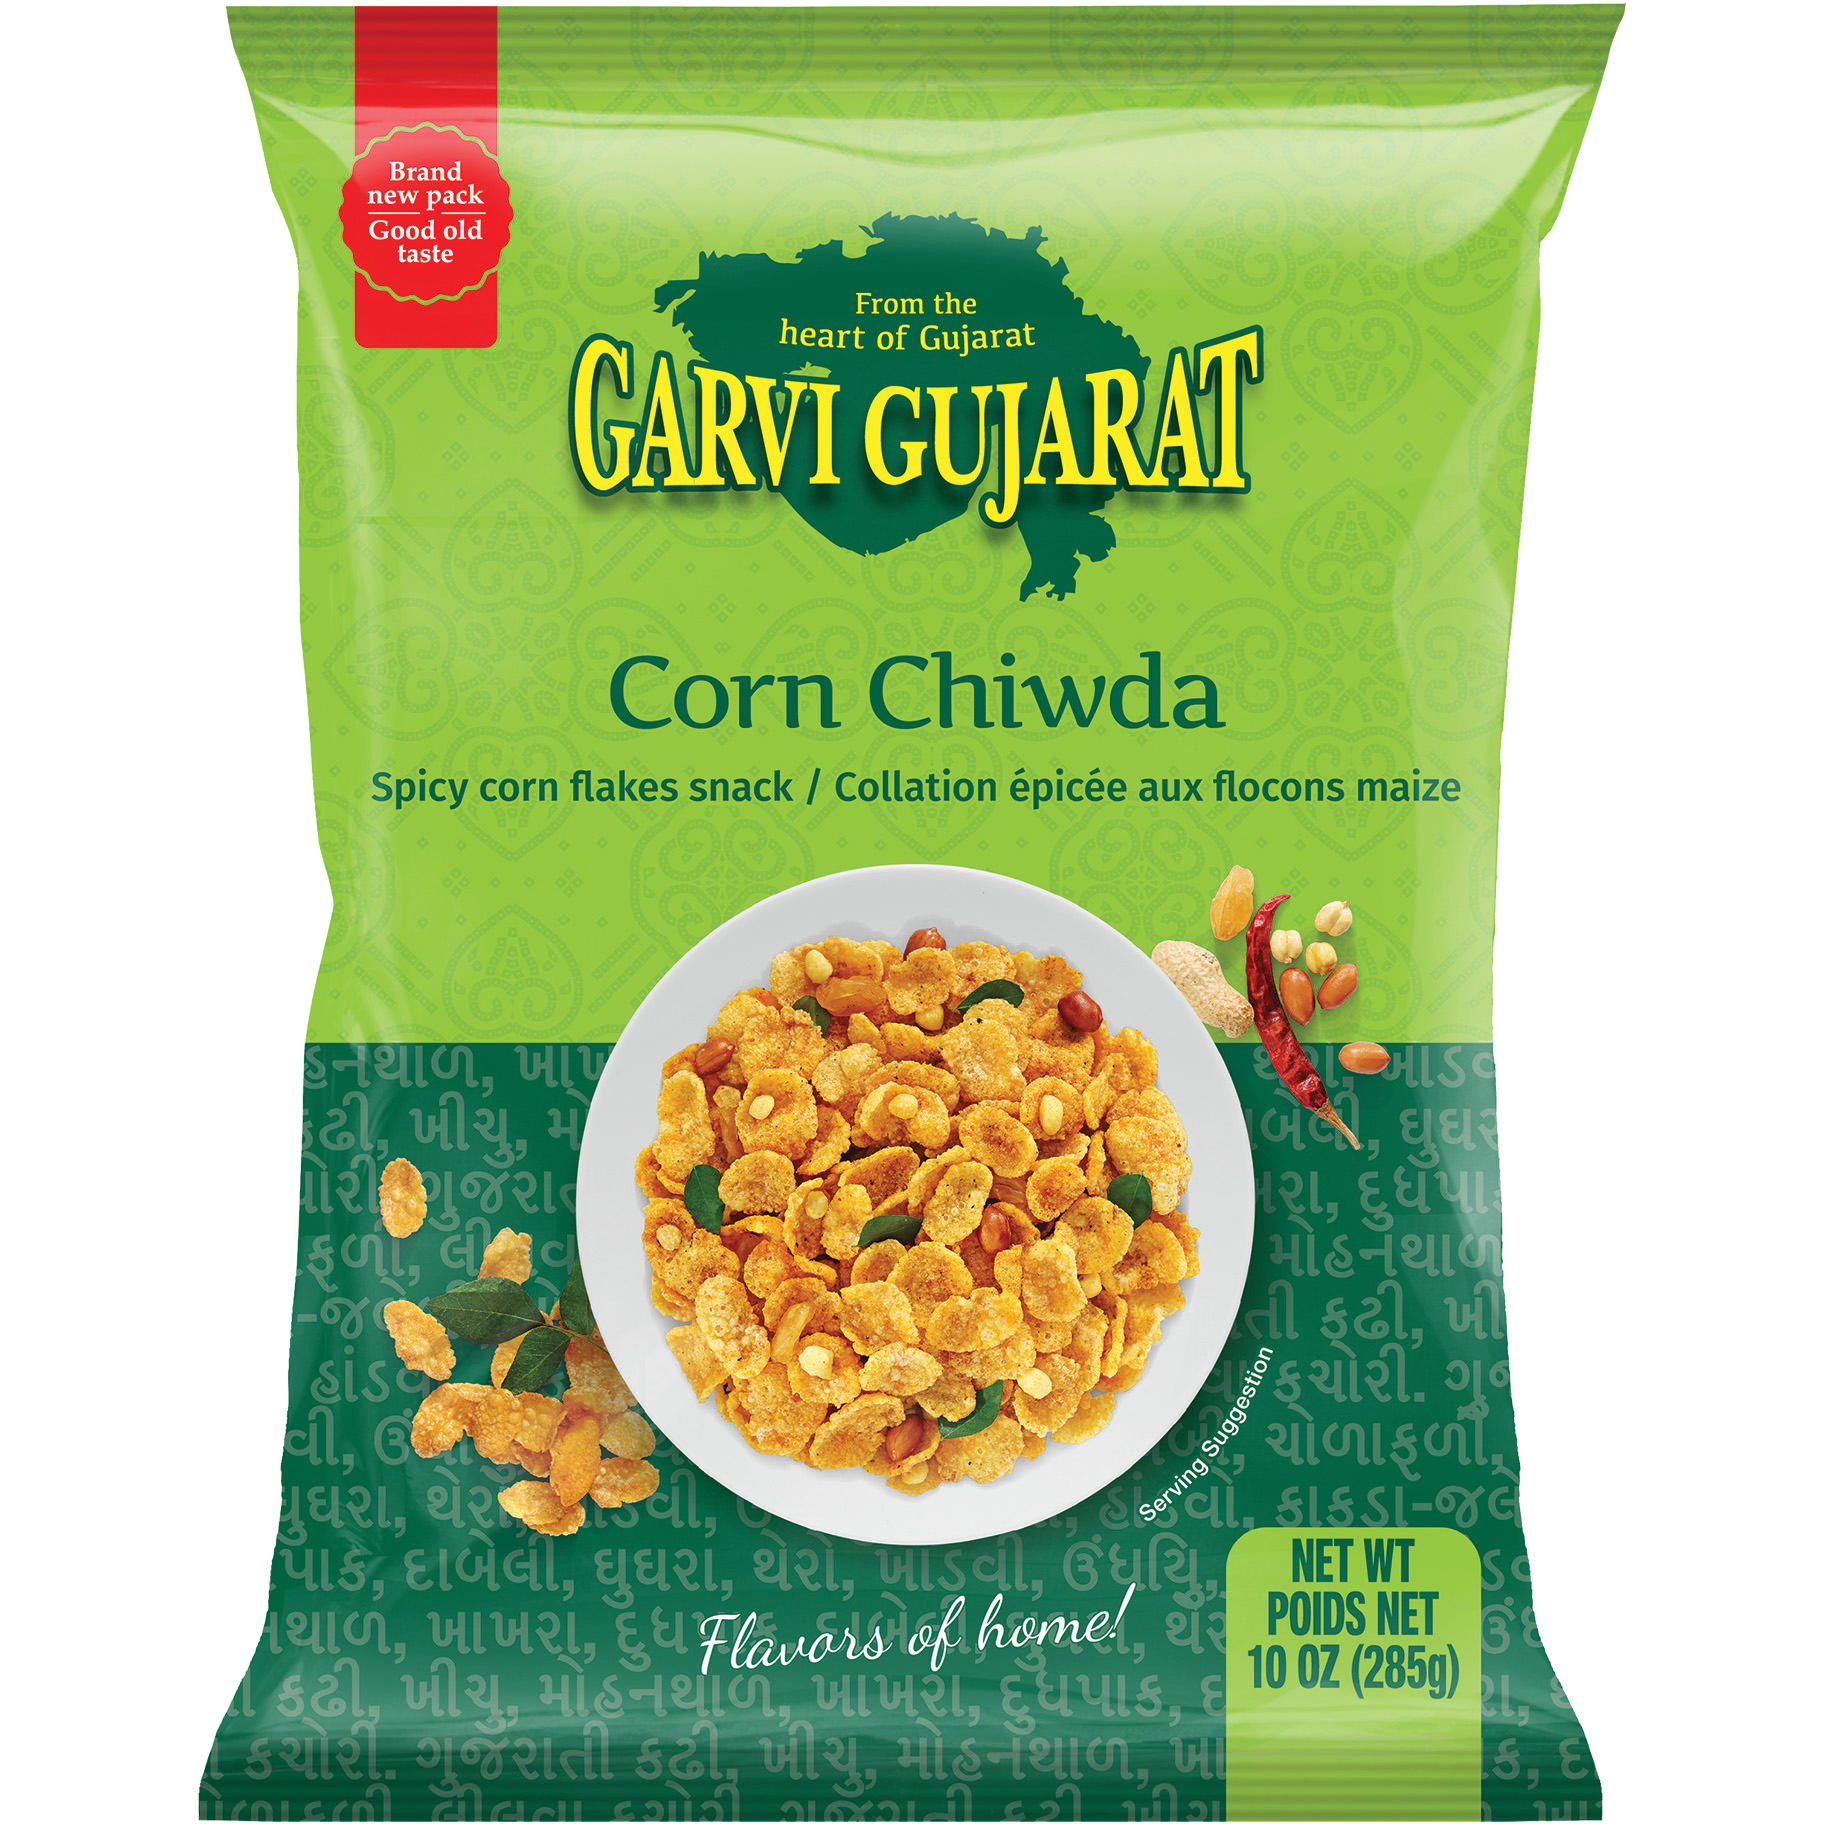 Pack of 4 - Garvi Gujarat Corn Chiwda - 285 Gm (10 Oz)